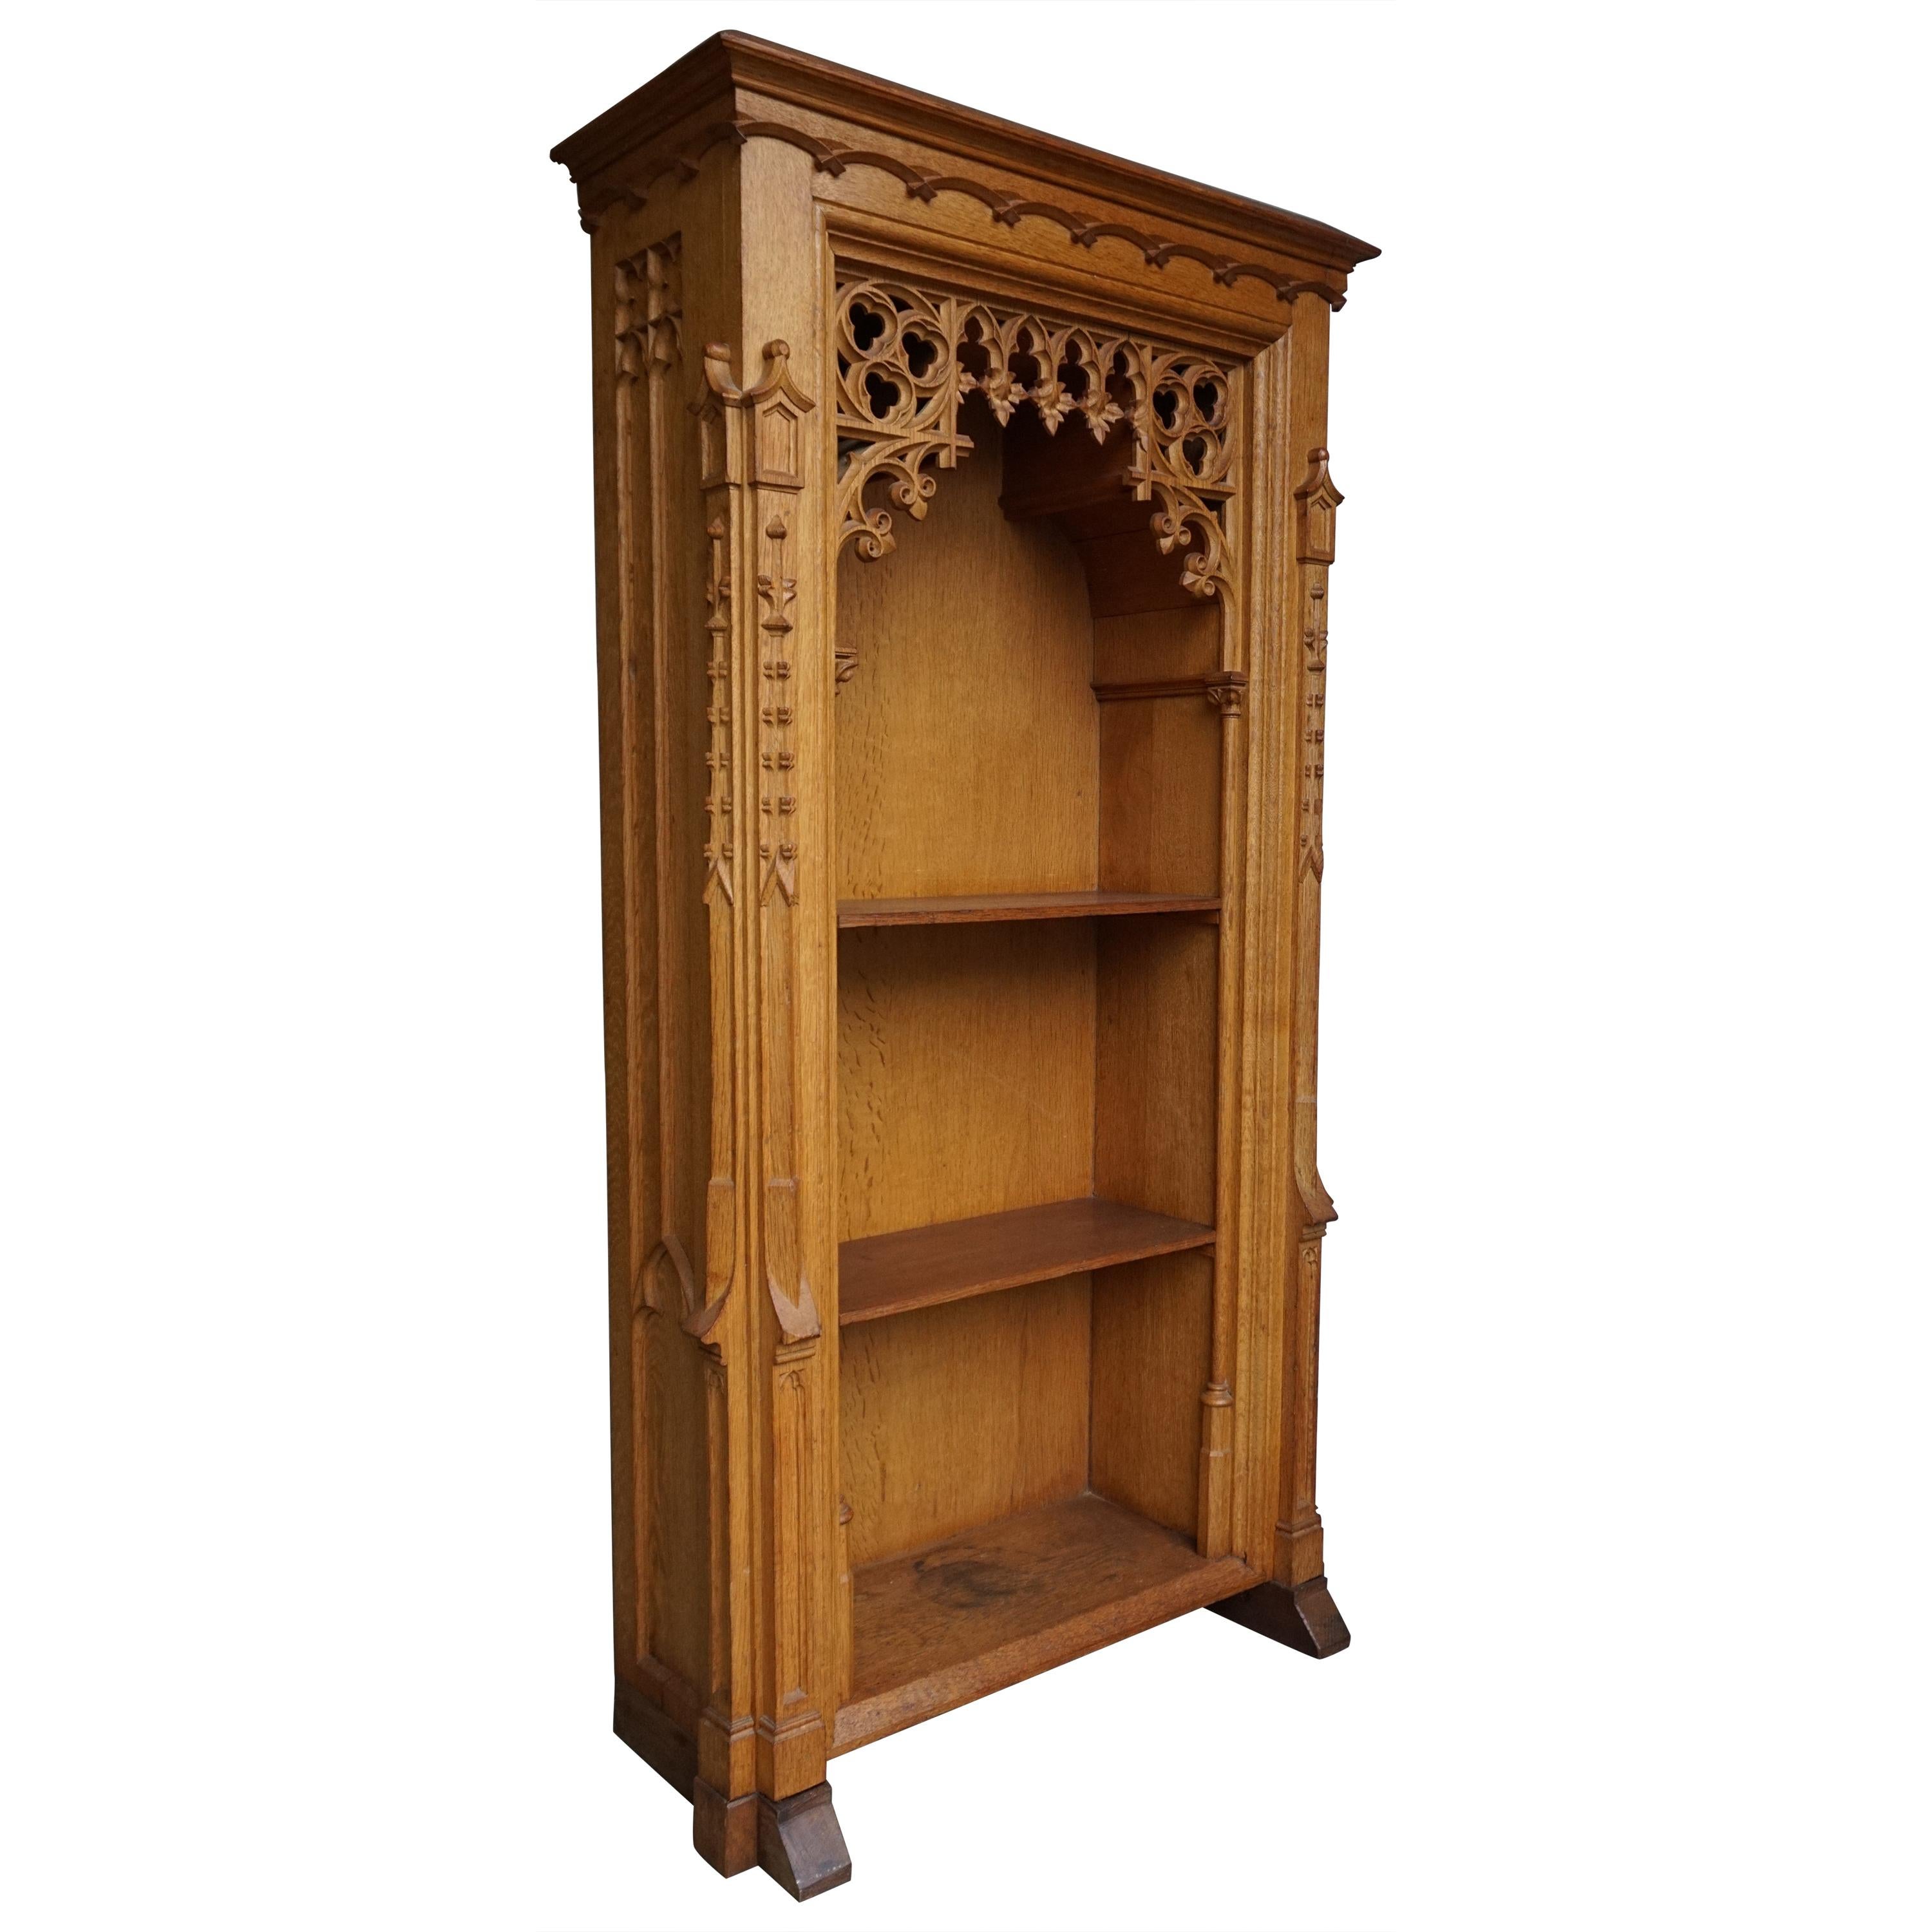 Stunning Hand Carved Light Oak Antique Gothic Revival Bookcase / Shrine Cabinet